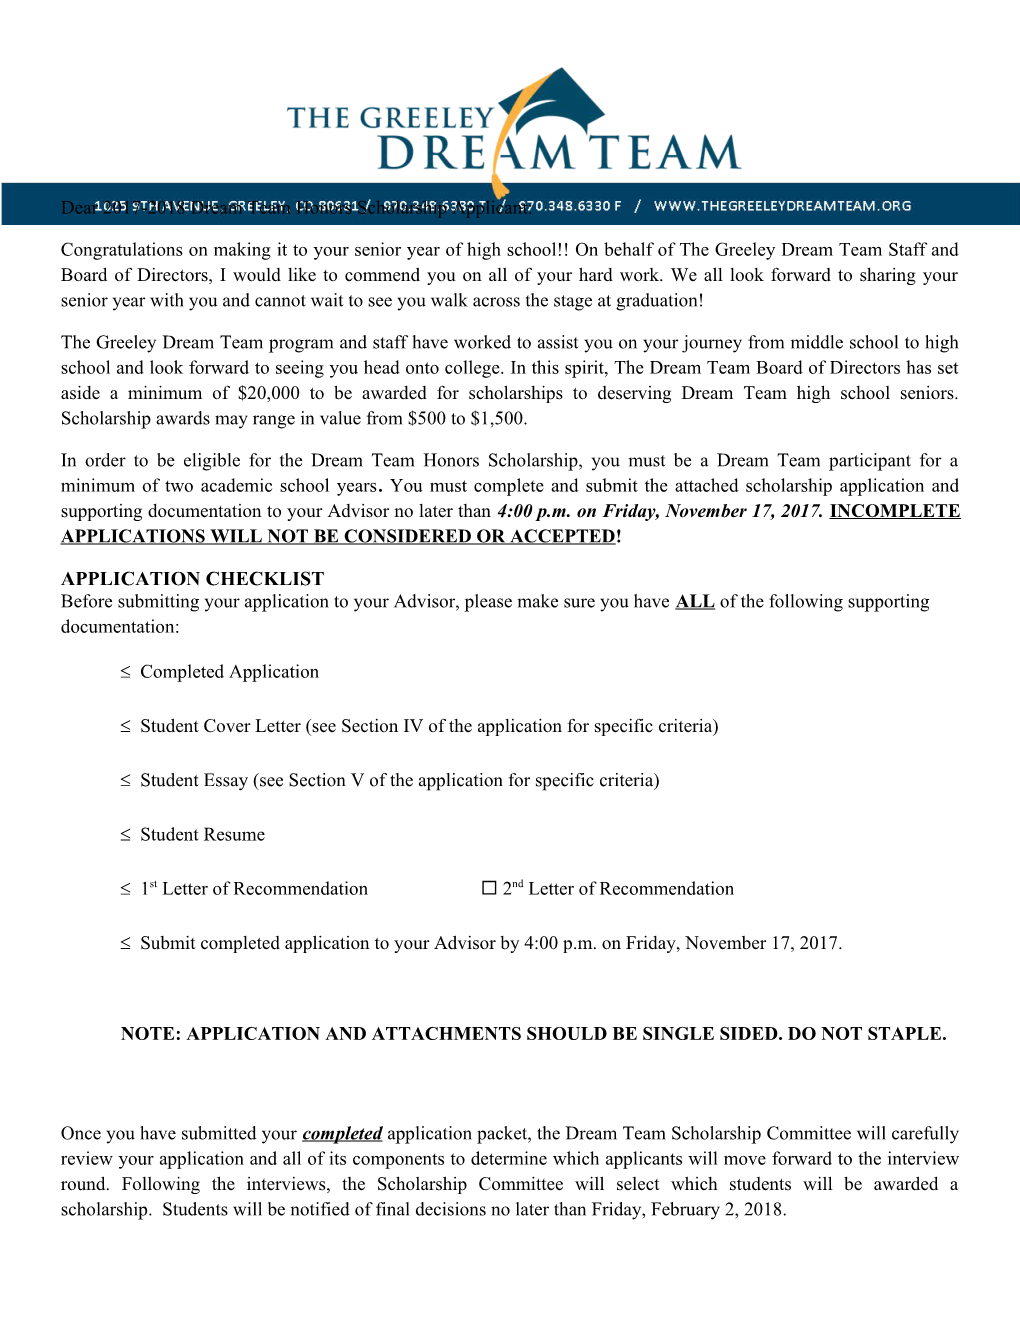 Dear 2017-2018 Dream Team Honors Scholarship Applicant